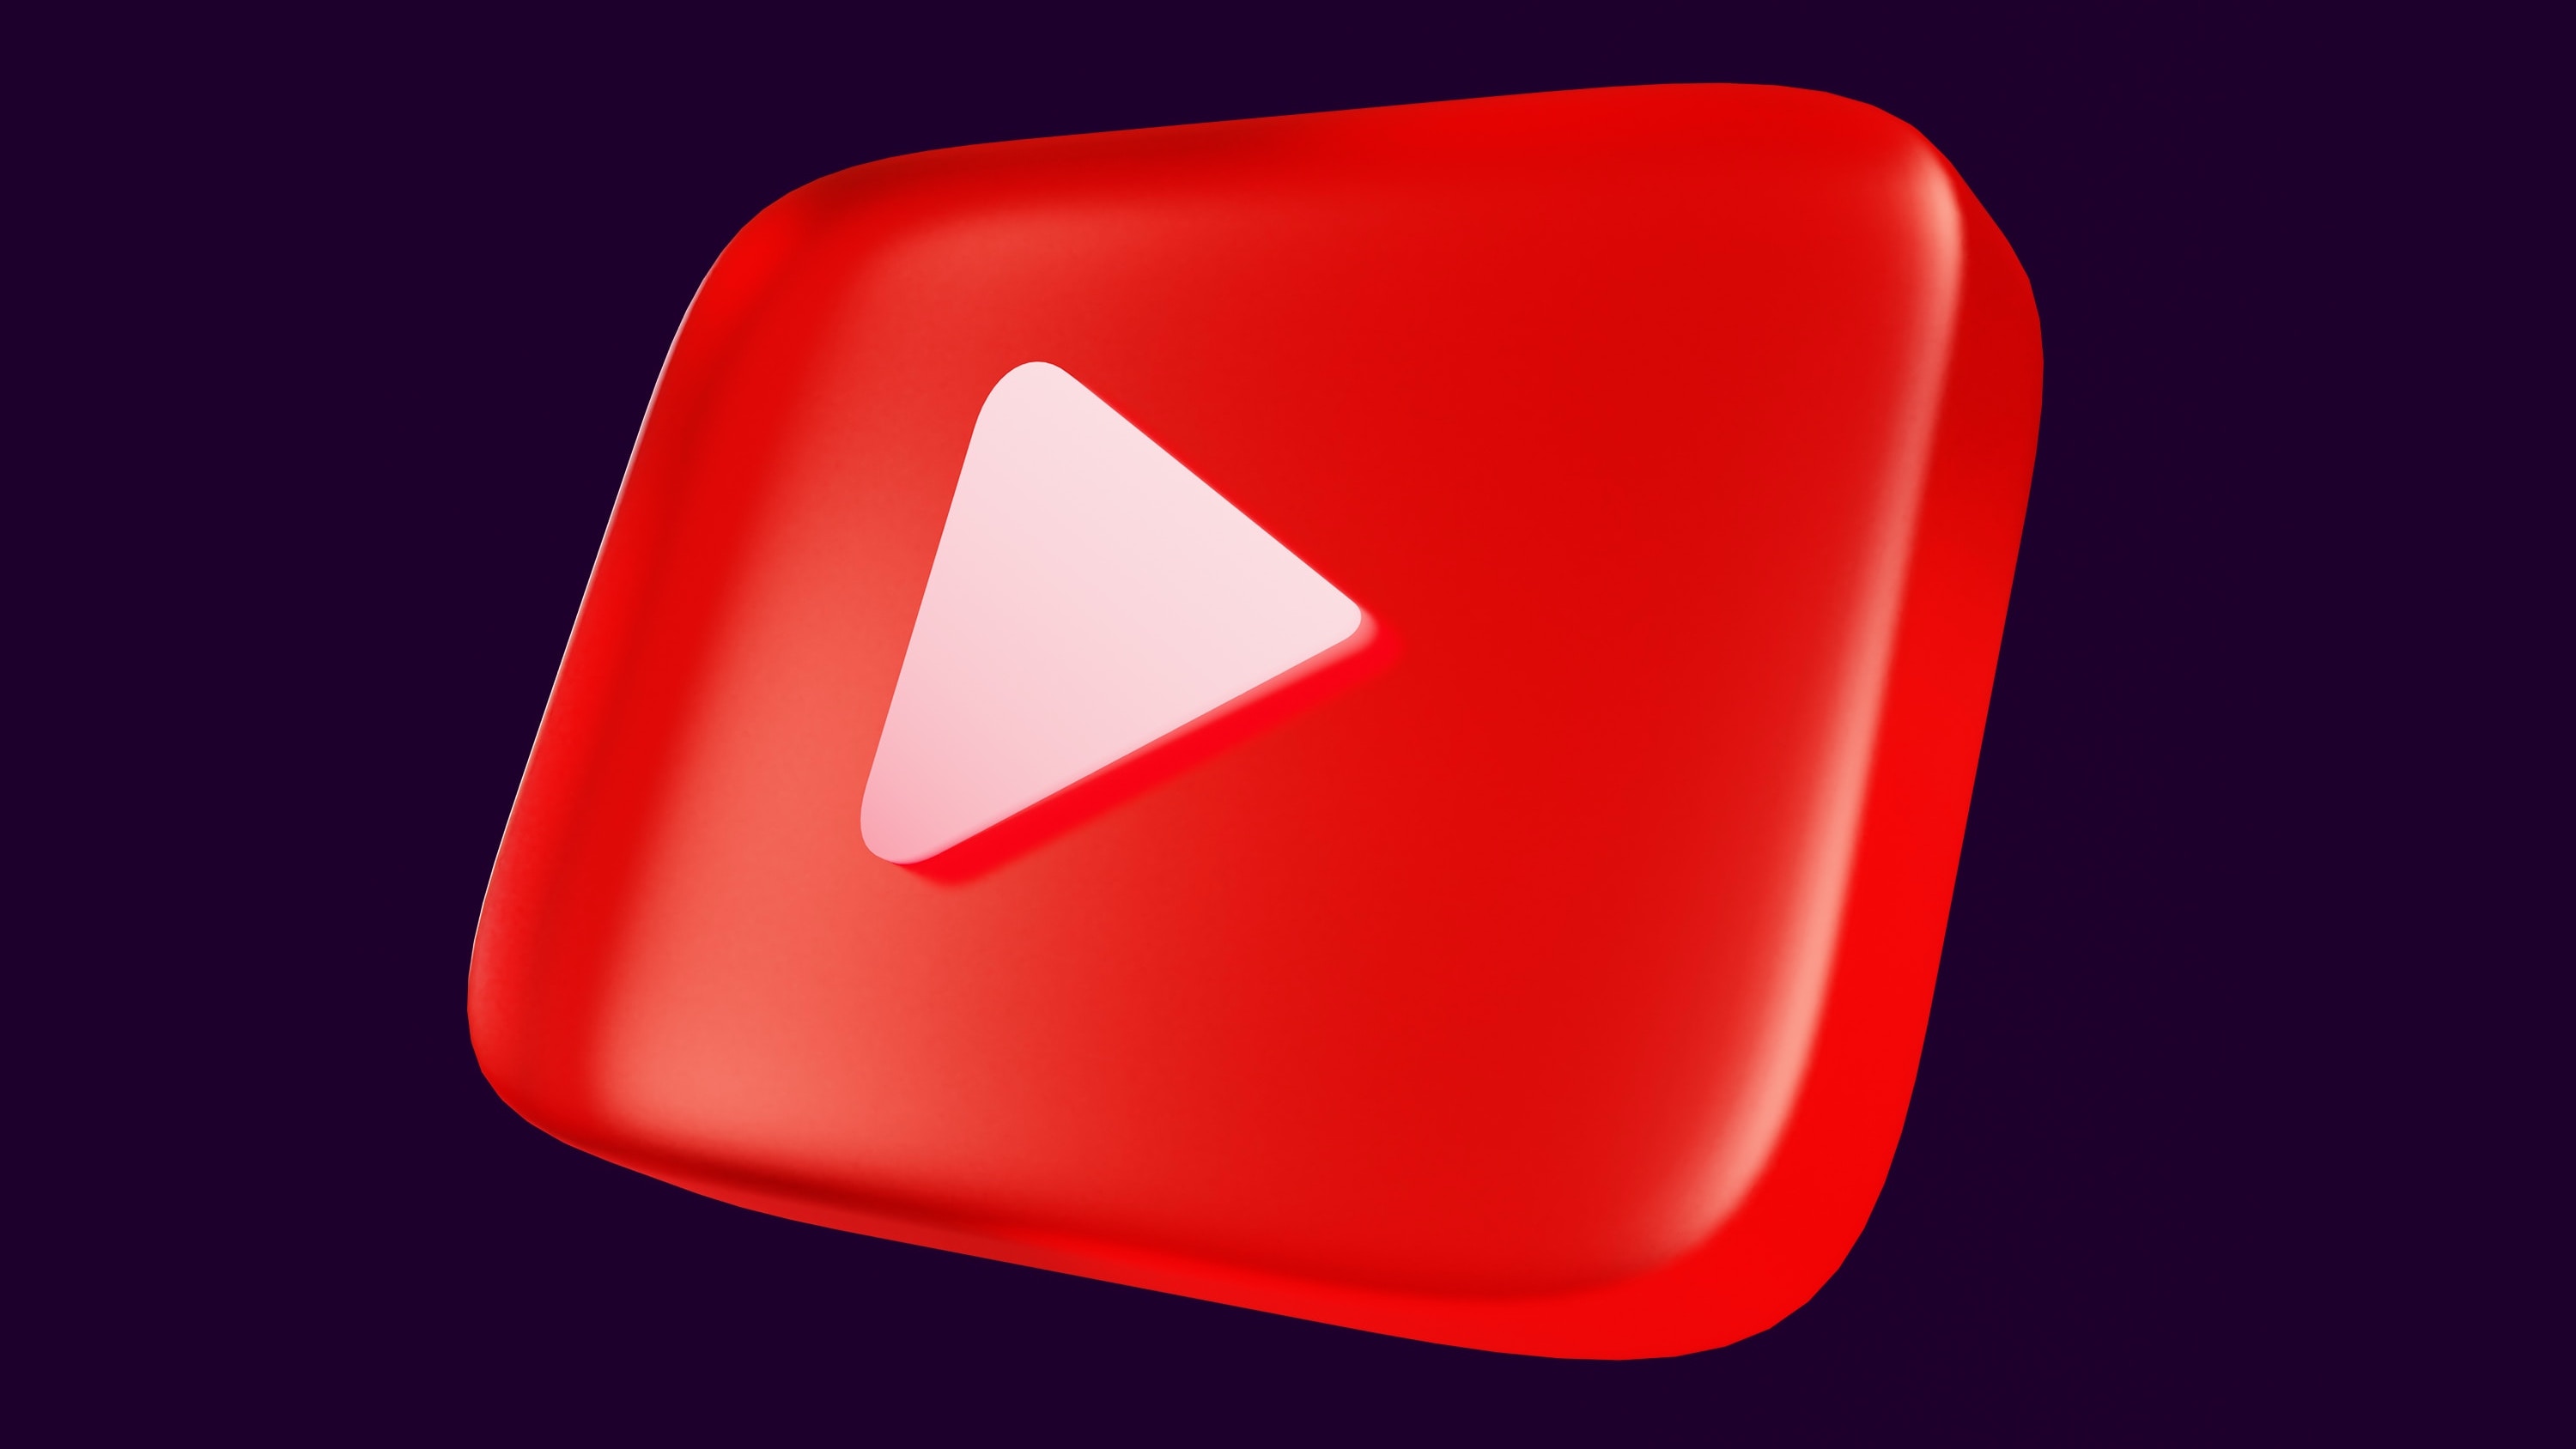 A 3D YouTube logo on a dark background